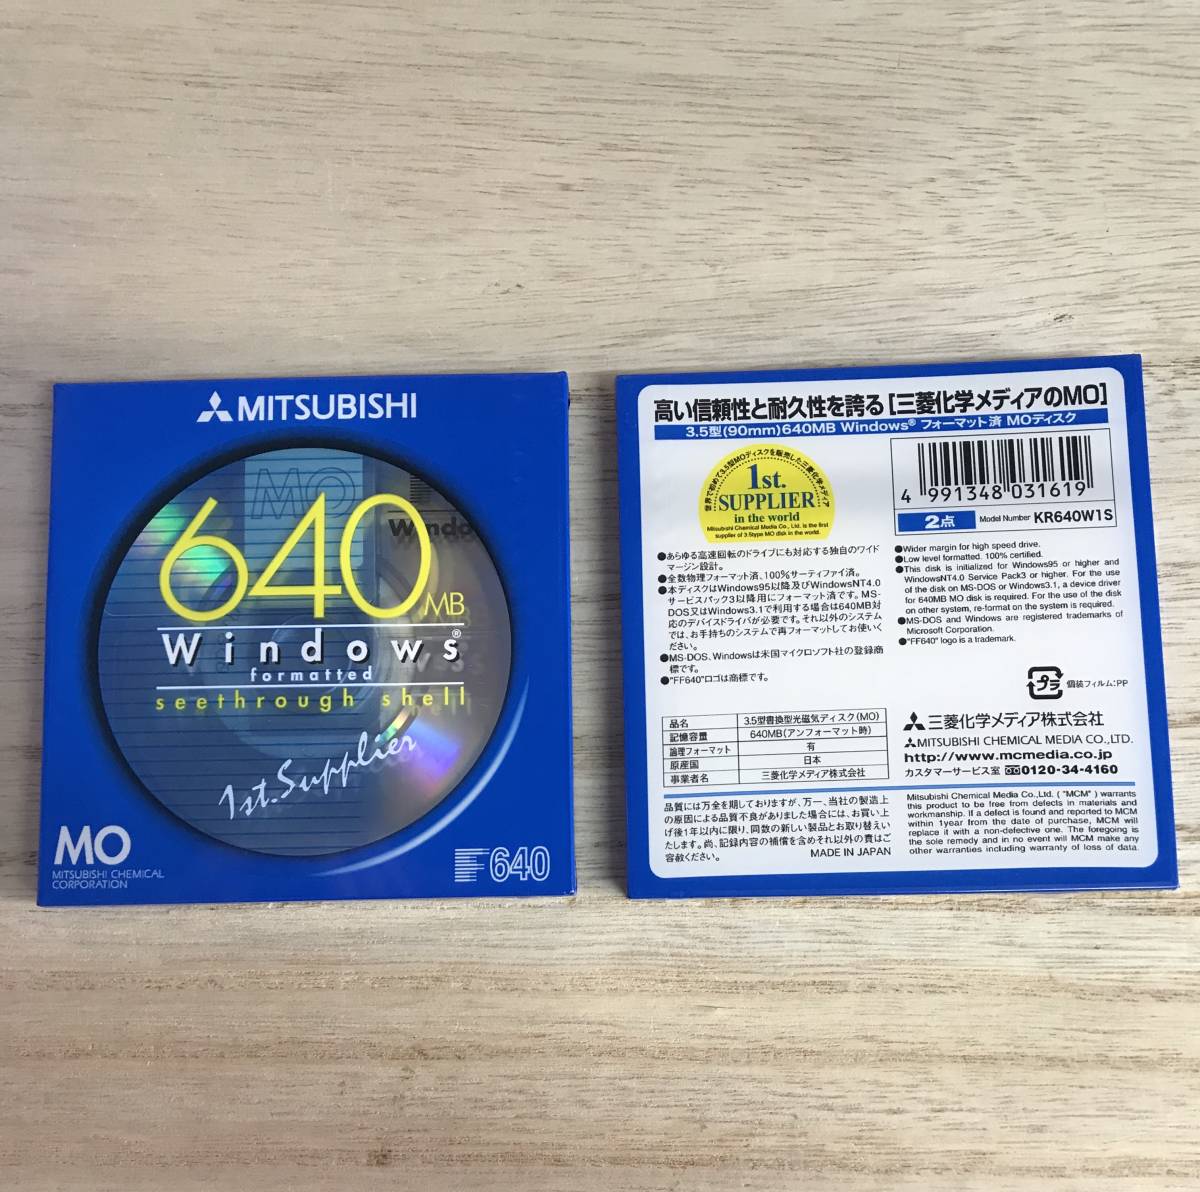 3.5 type (90mm)MO disk |8 sheets entering |640MB|KR640W20ST|MITSUBISHI| Mitsubishi | new goods unopened 